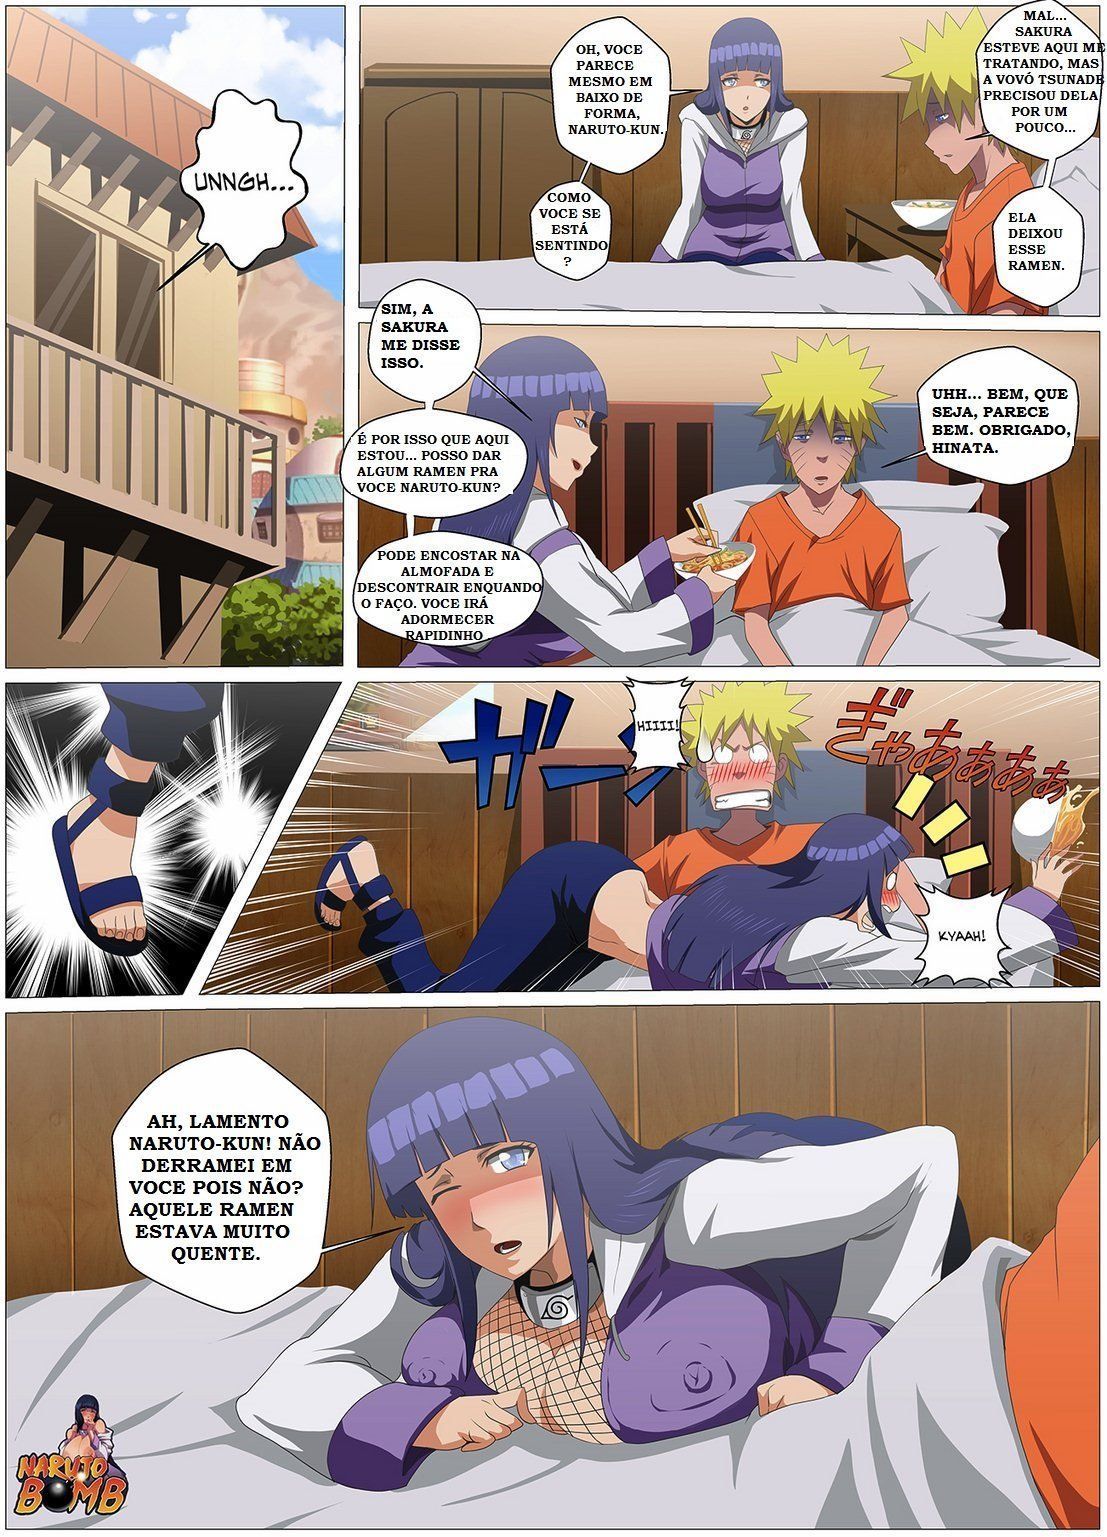 Hinata ajudando Naruto à se curar (2)